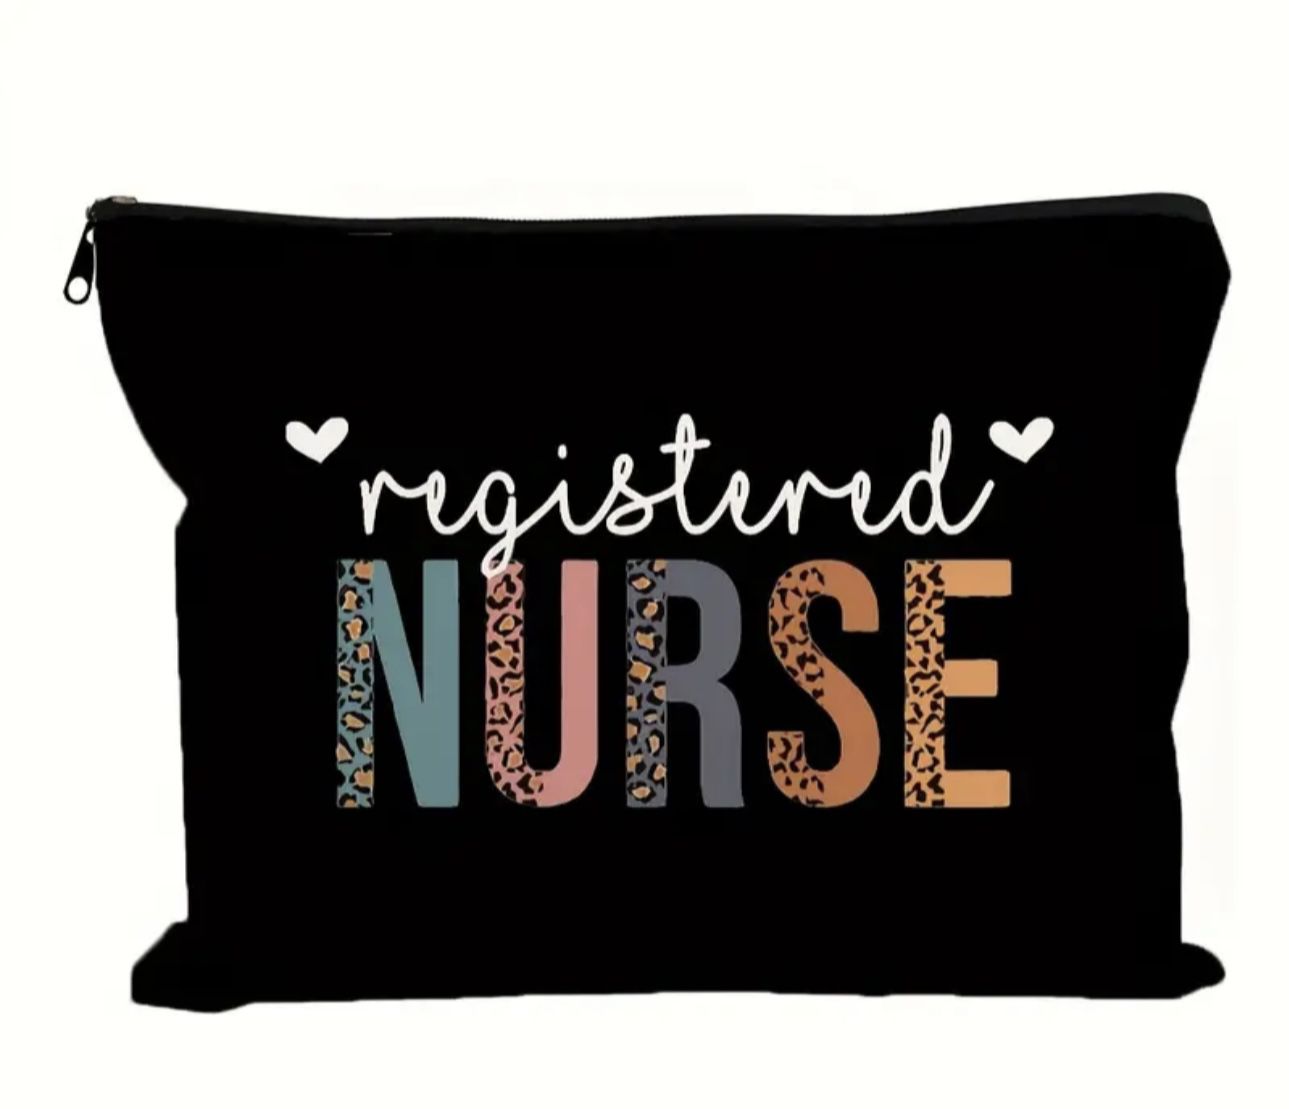 Registered Nurse Baggie 🖤 $6